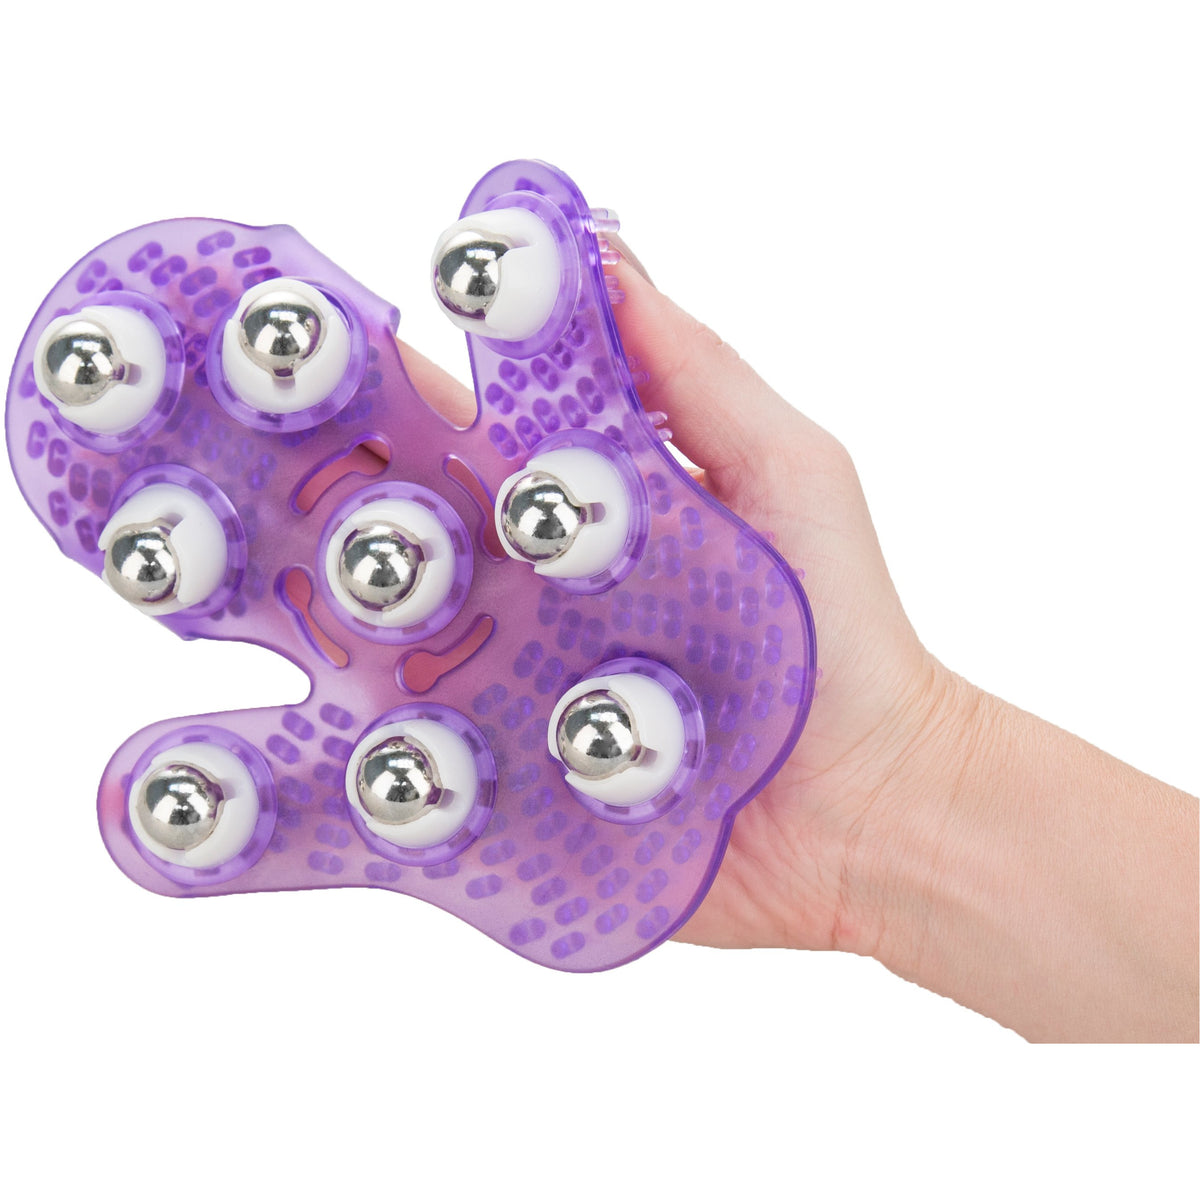 Simple and True Roller Balls Massage Glove - Purple